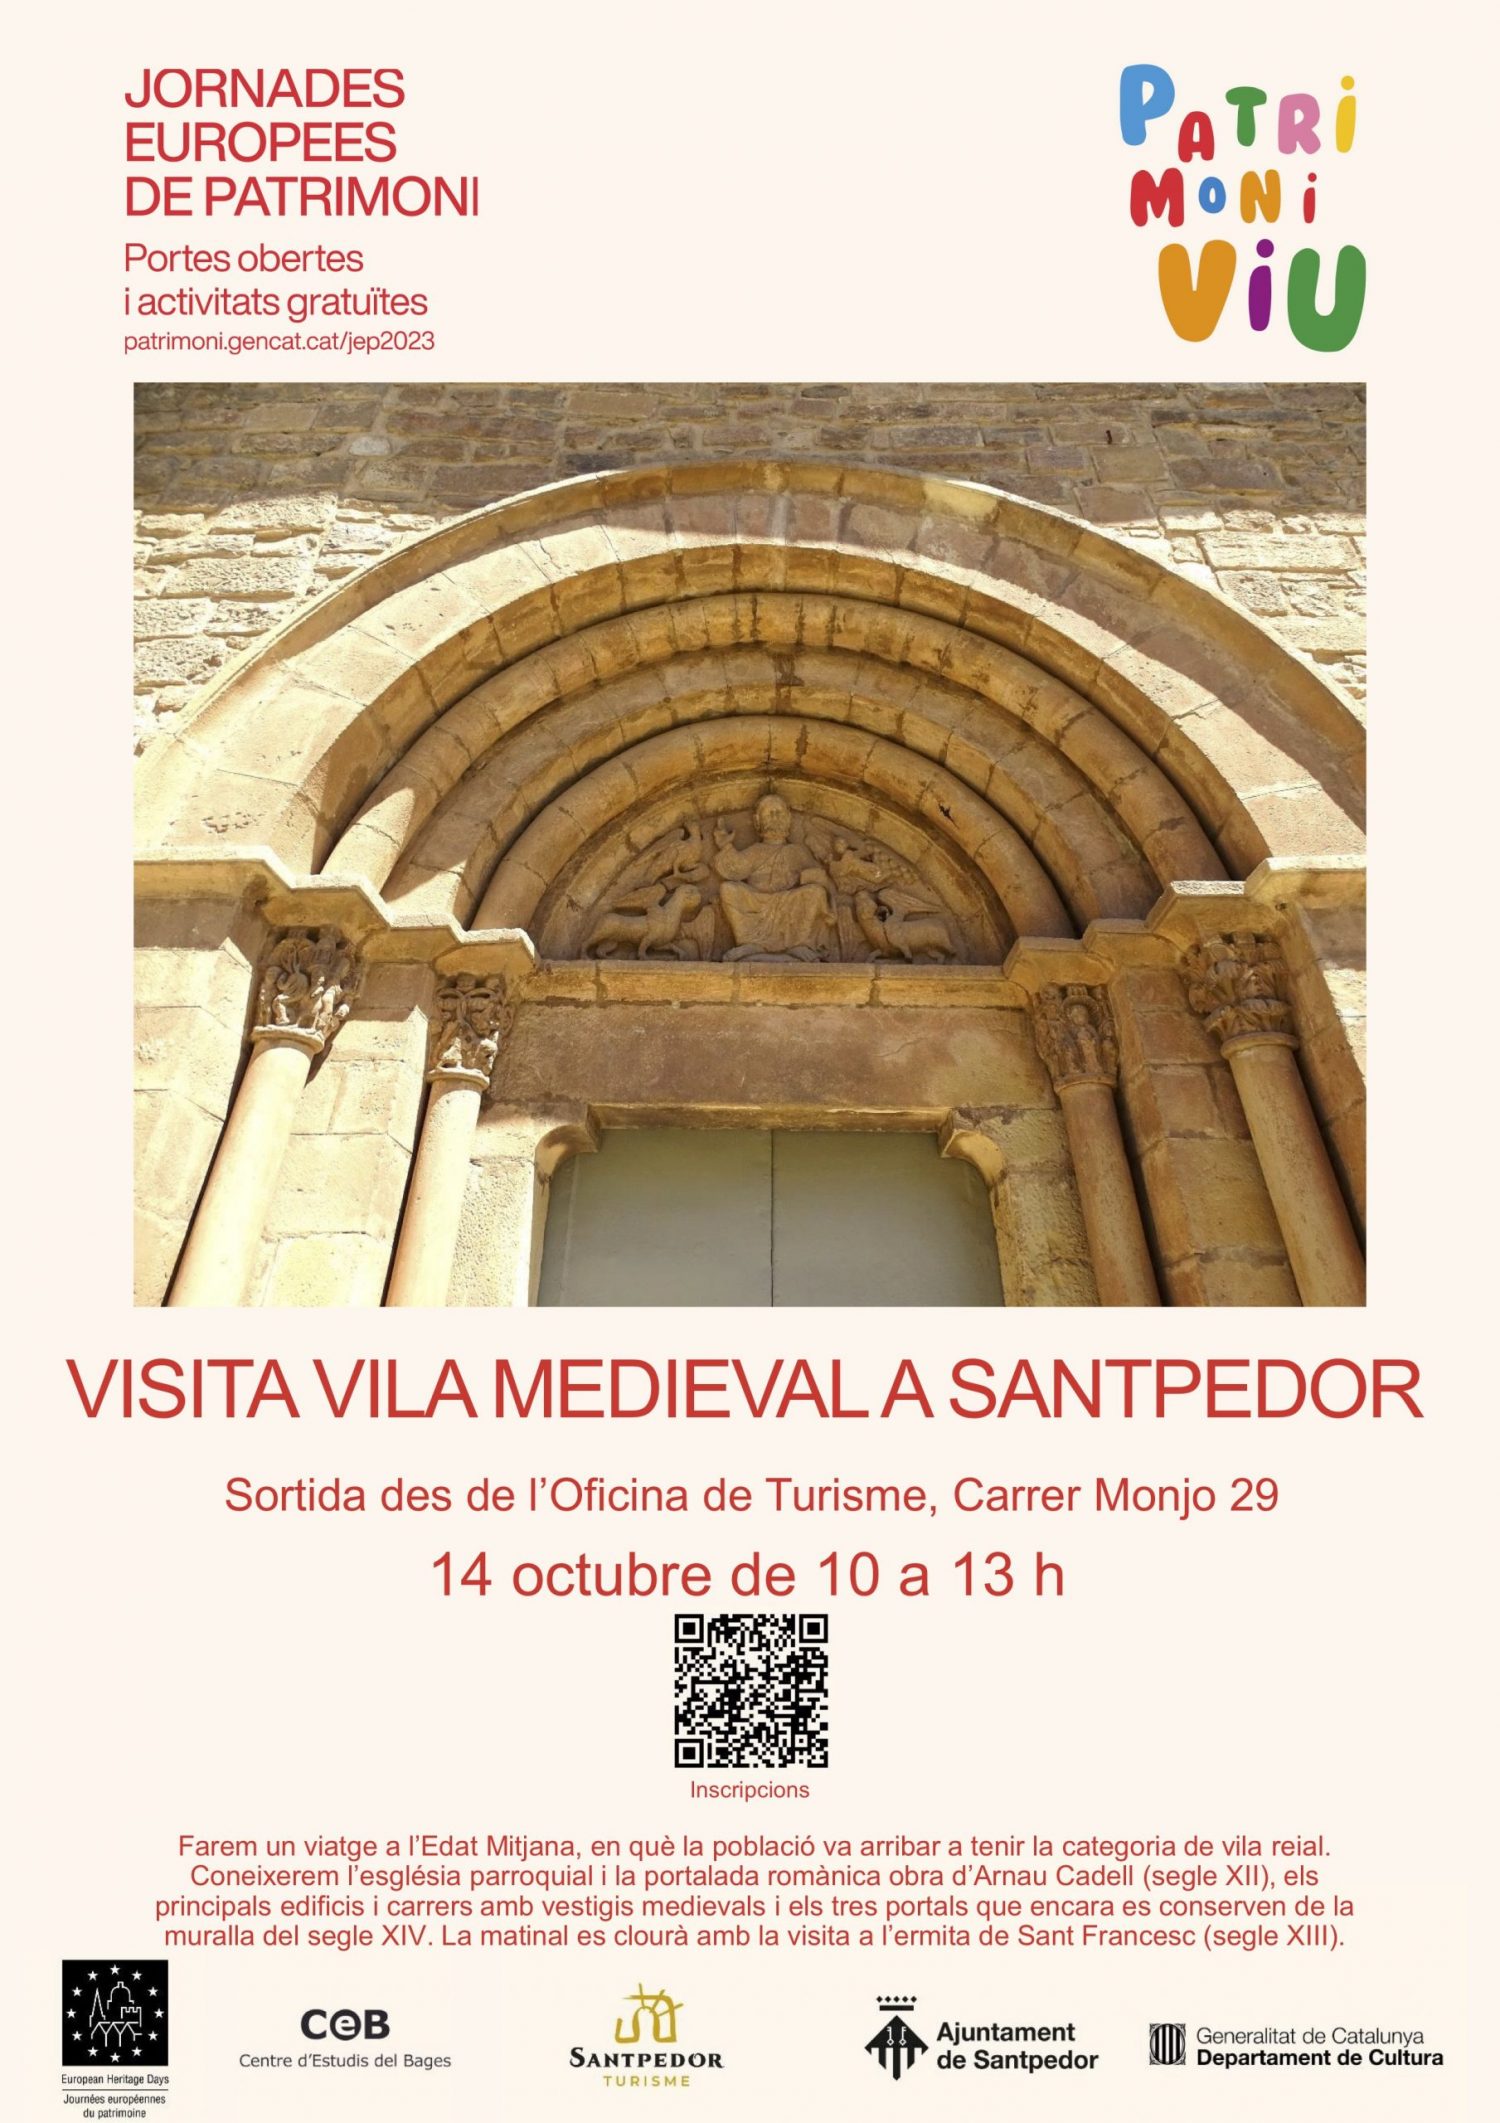 Jornades de Patrimoni 2023: visita guiada a la vila medieval de Santpedor